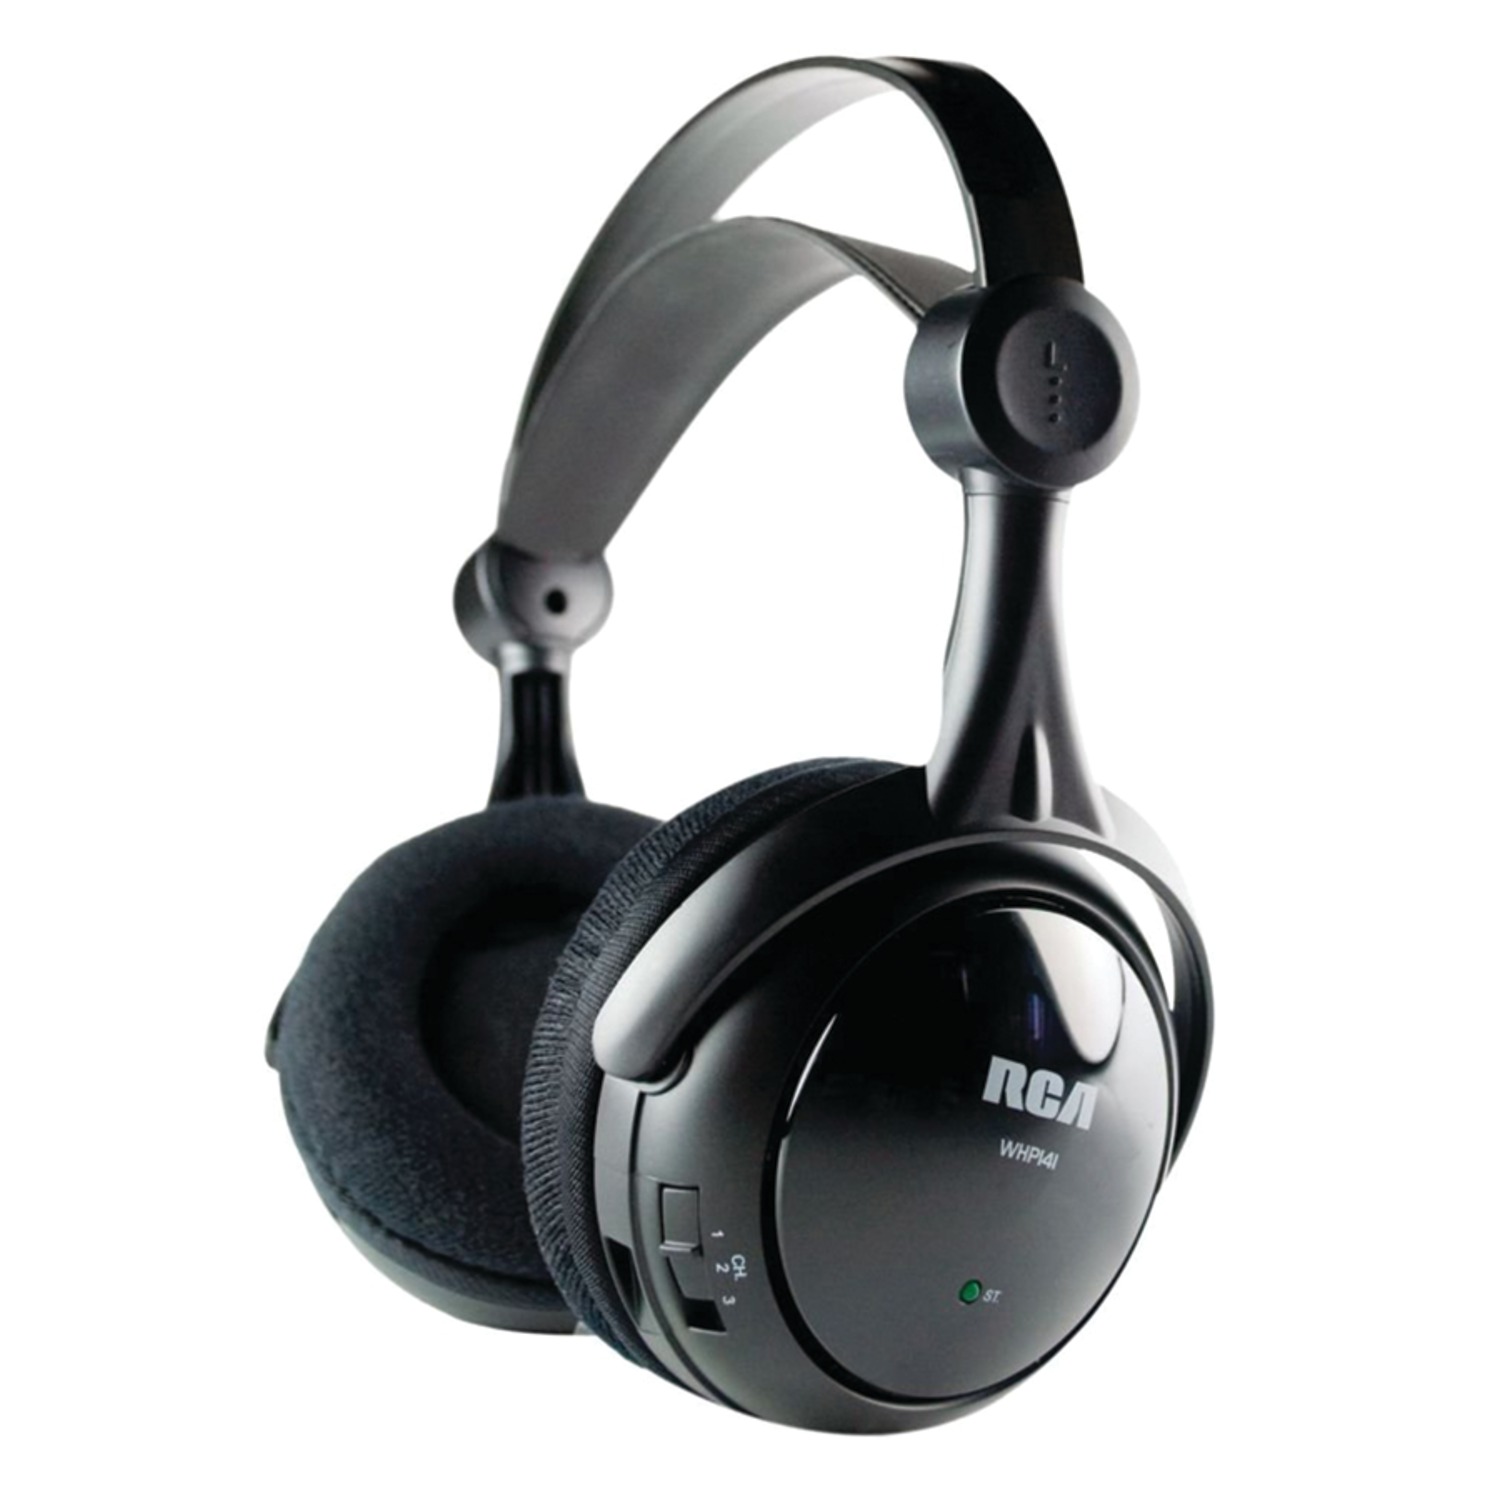 Rca W141b 900mhz Stereo Headphones - image 2 of 6